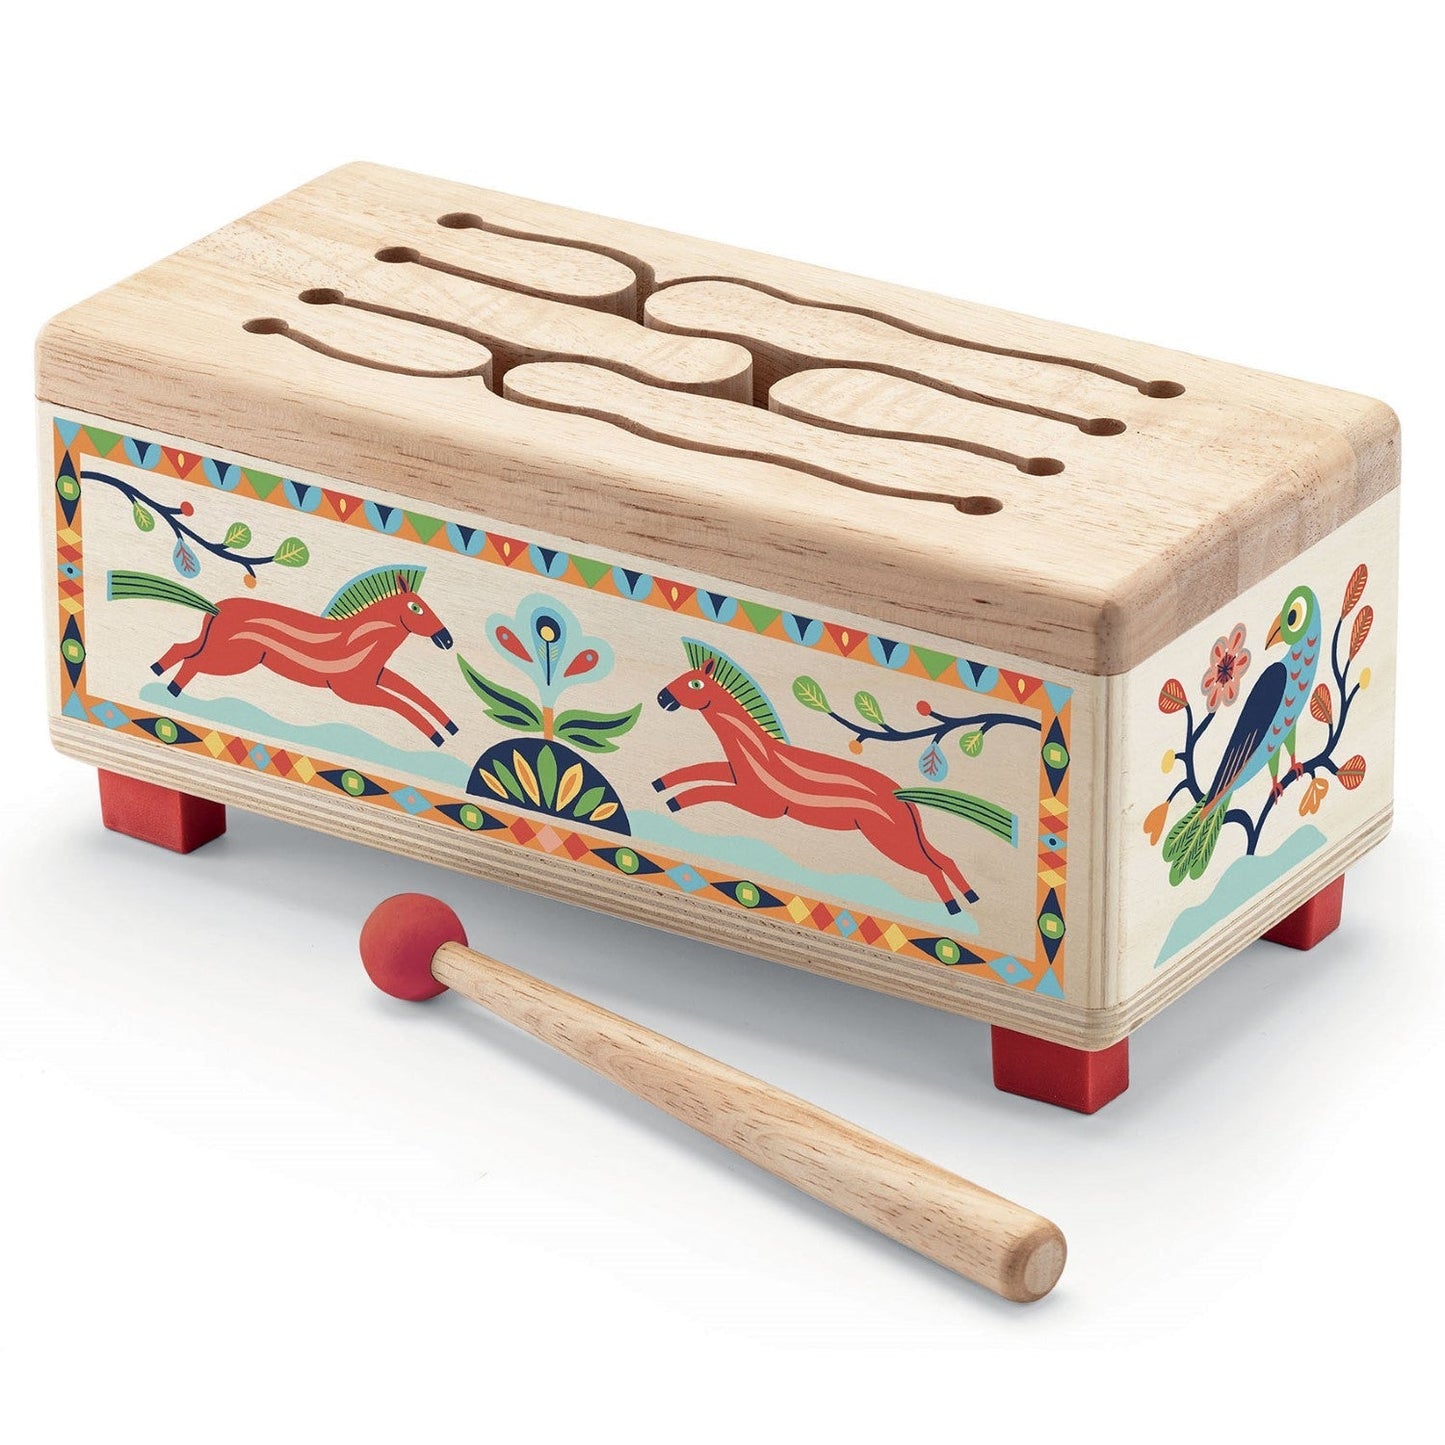 Animambo Wooden Drum Musical Instrument